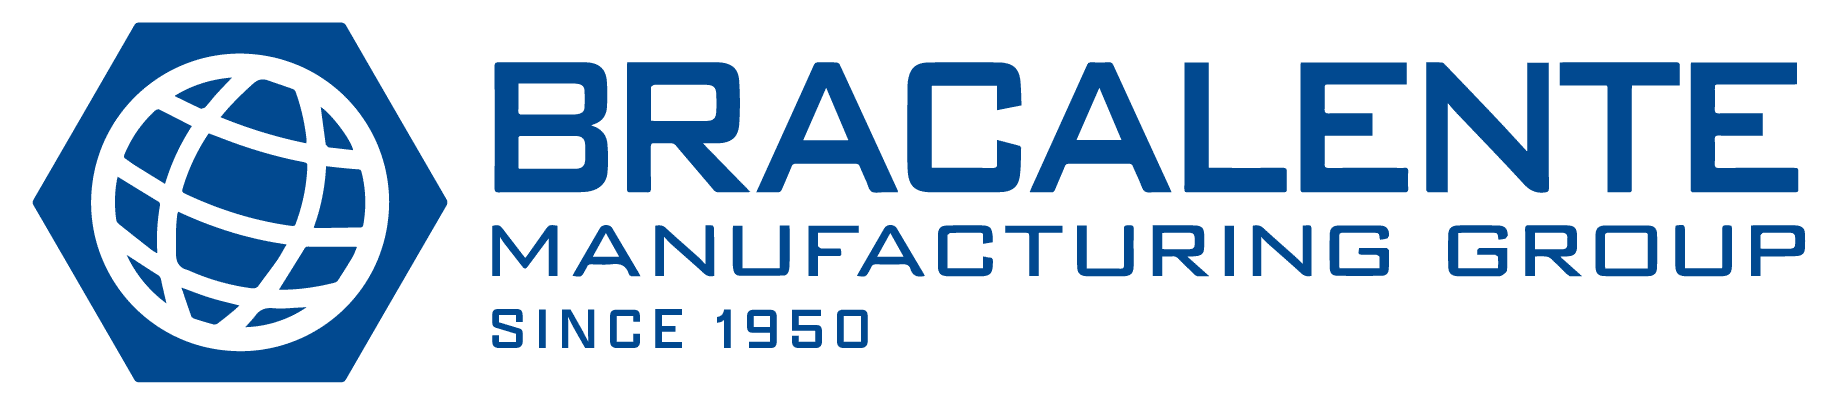 Bracalente Manufacturing Group od 1950